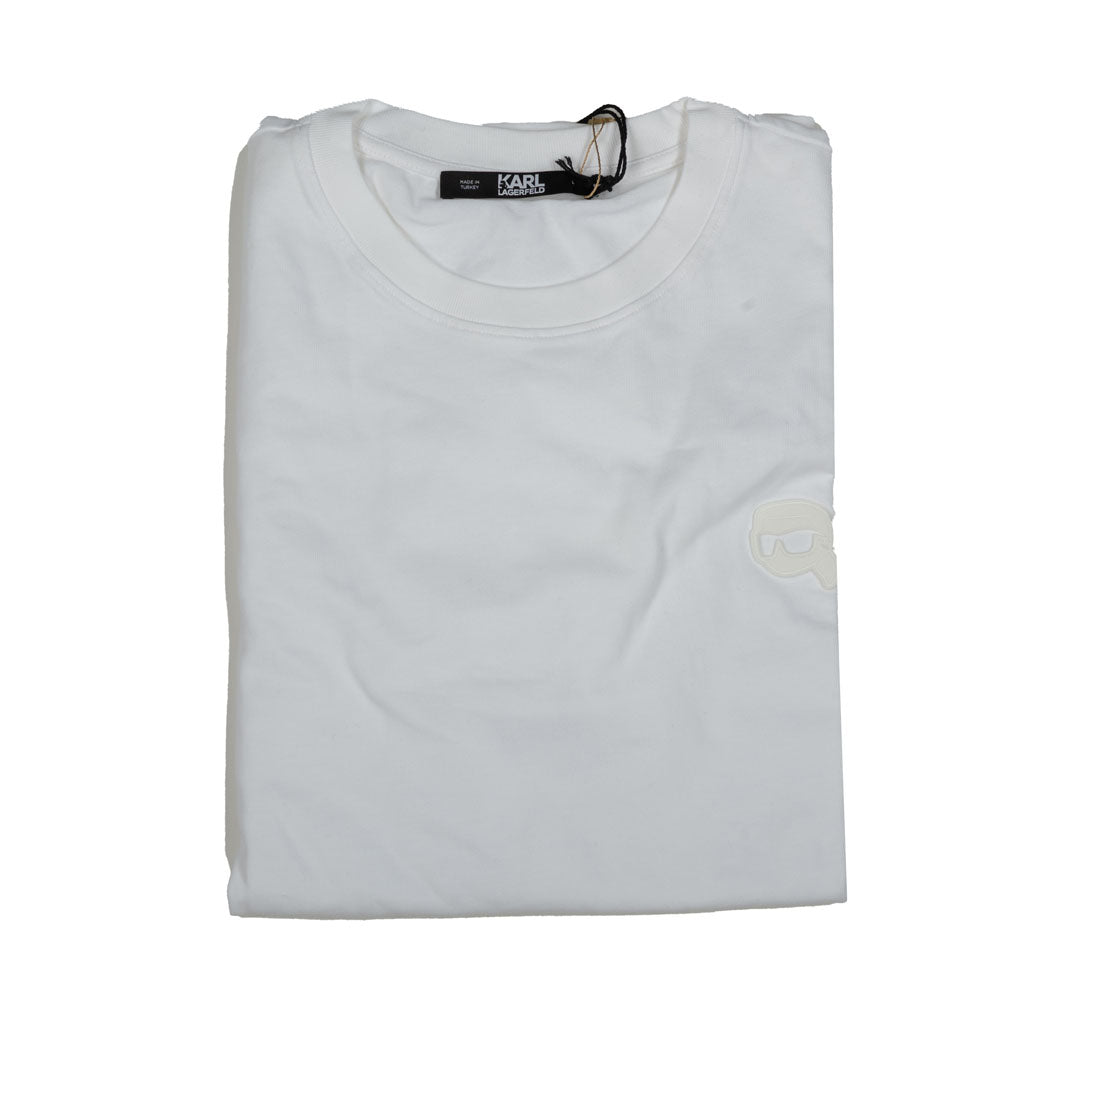 Karl Lagerfeld Brand New T-shirt - mymadstore.com